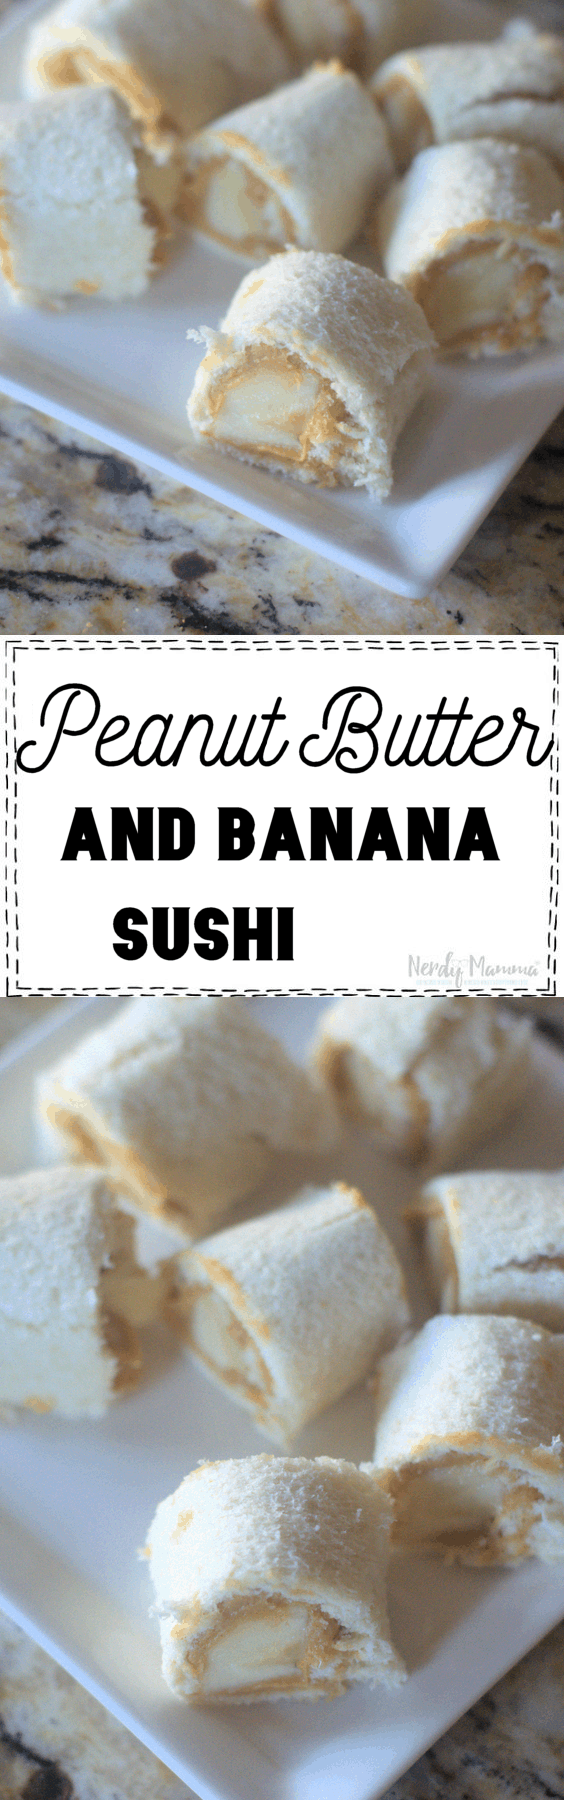 Peanut Butter and Banana Sushi